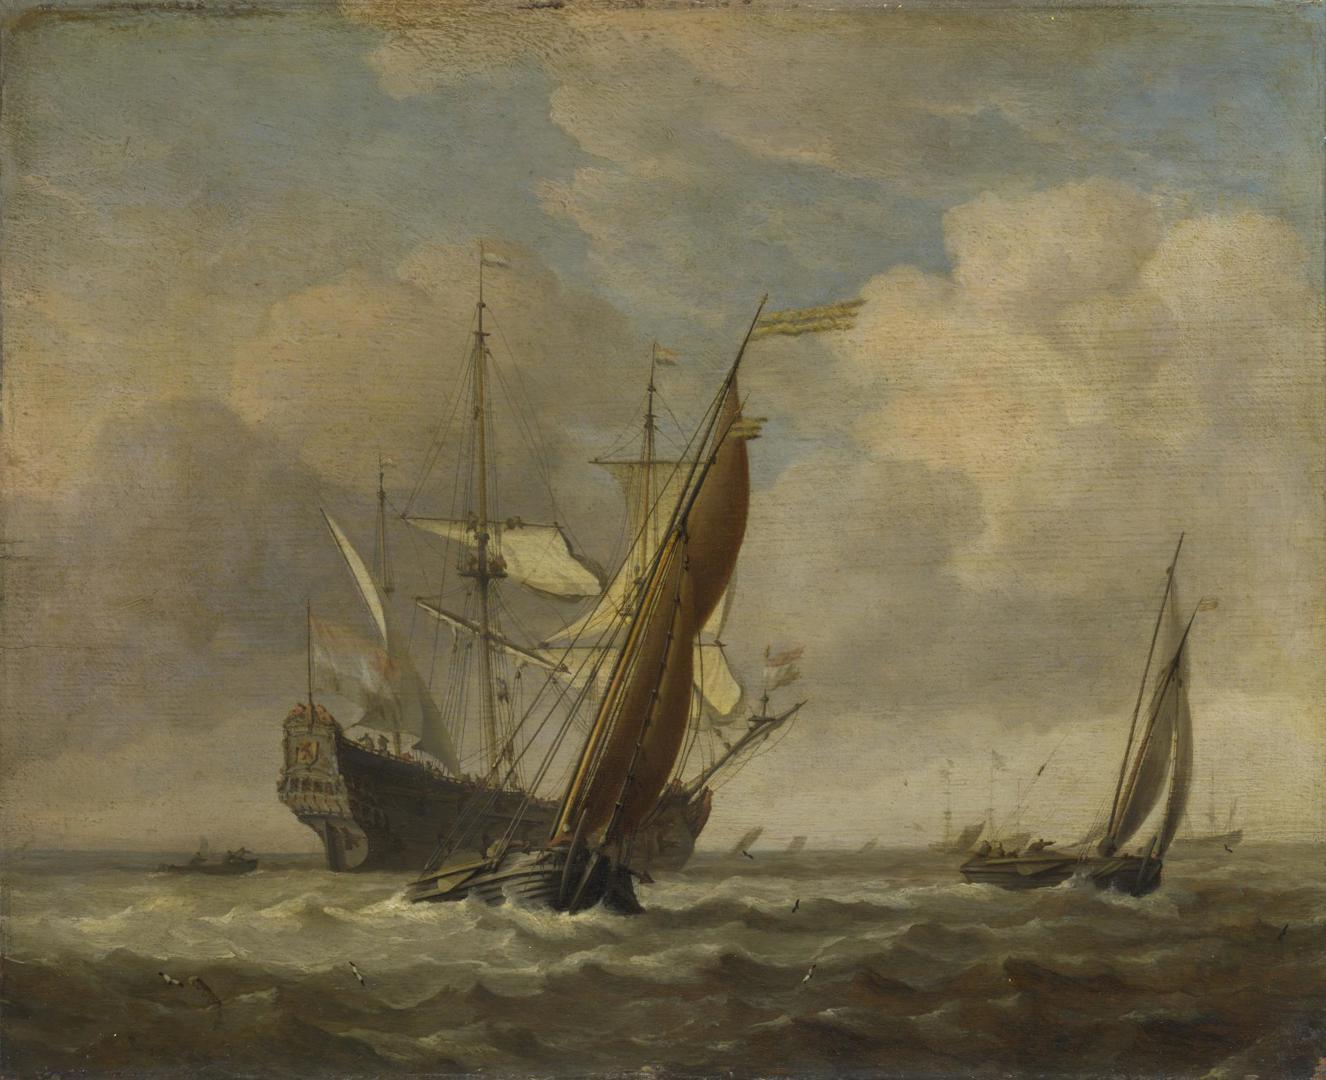 Two Small Vessels and a Dutch Man-of-War in a Breeze by Willem van de Velde